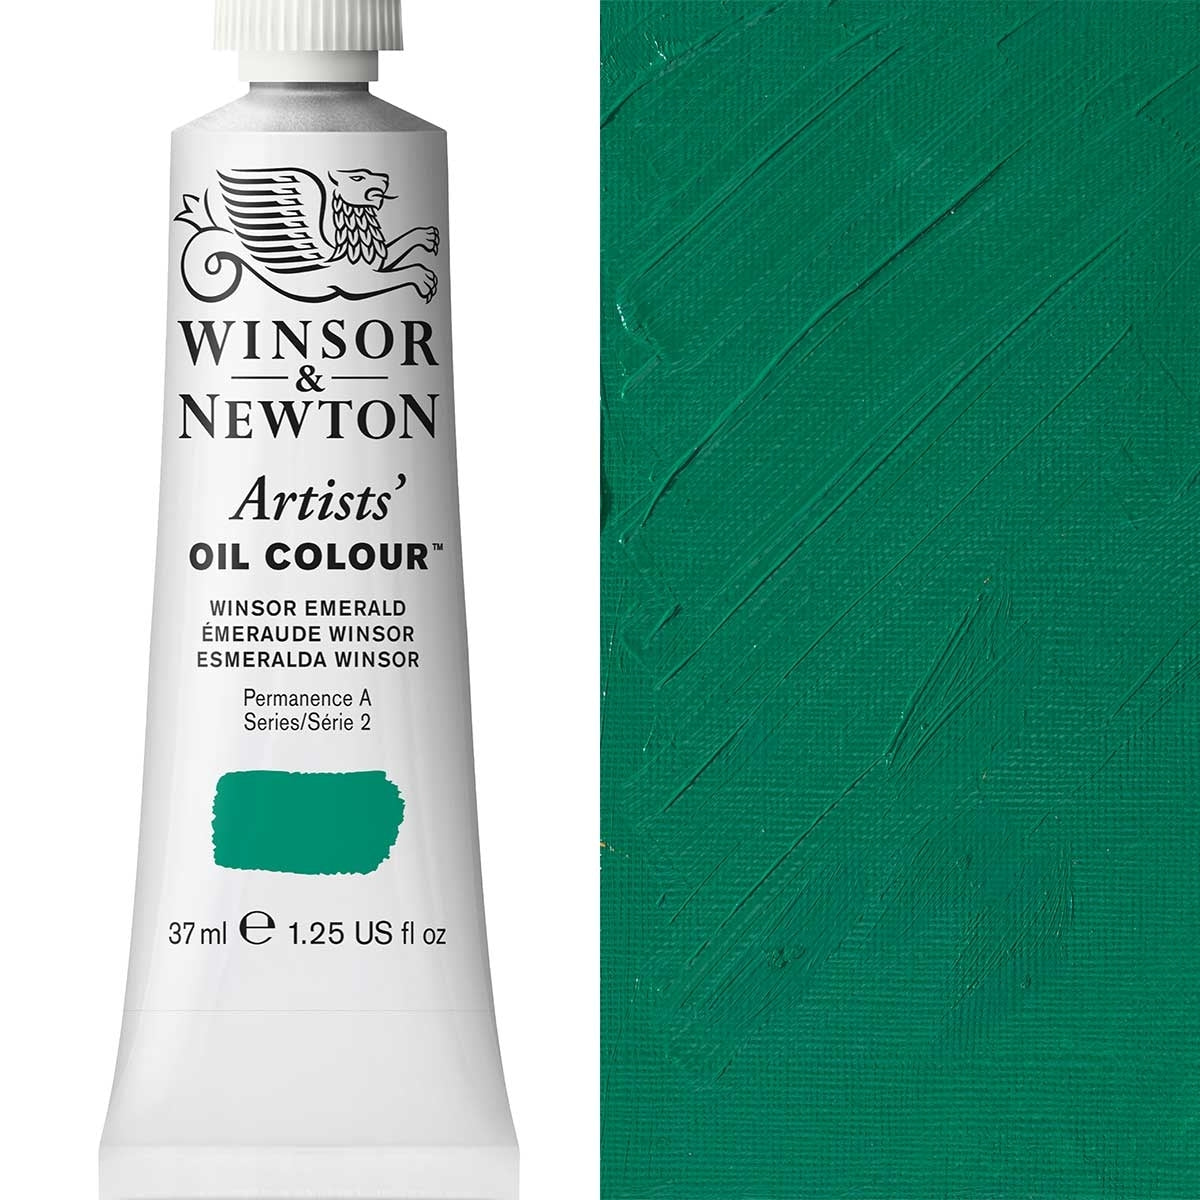 Winsor and Newton - Artists' Oil Colour - 37ml - Winsor Emerald